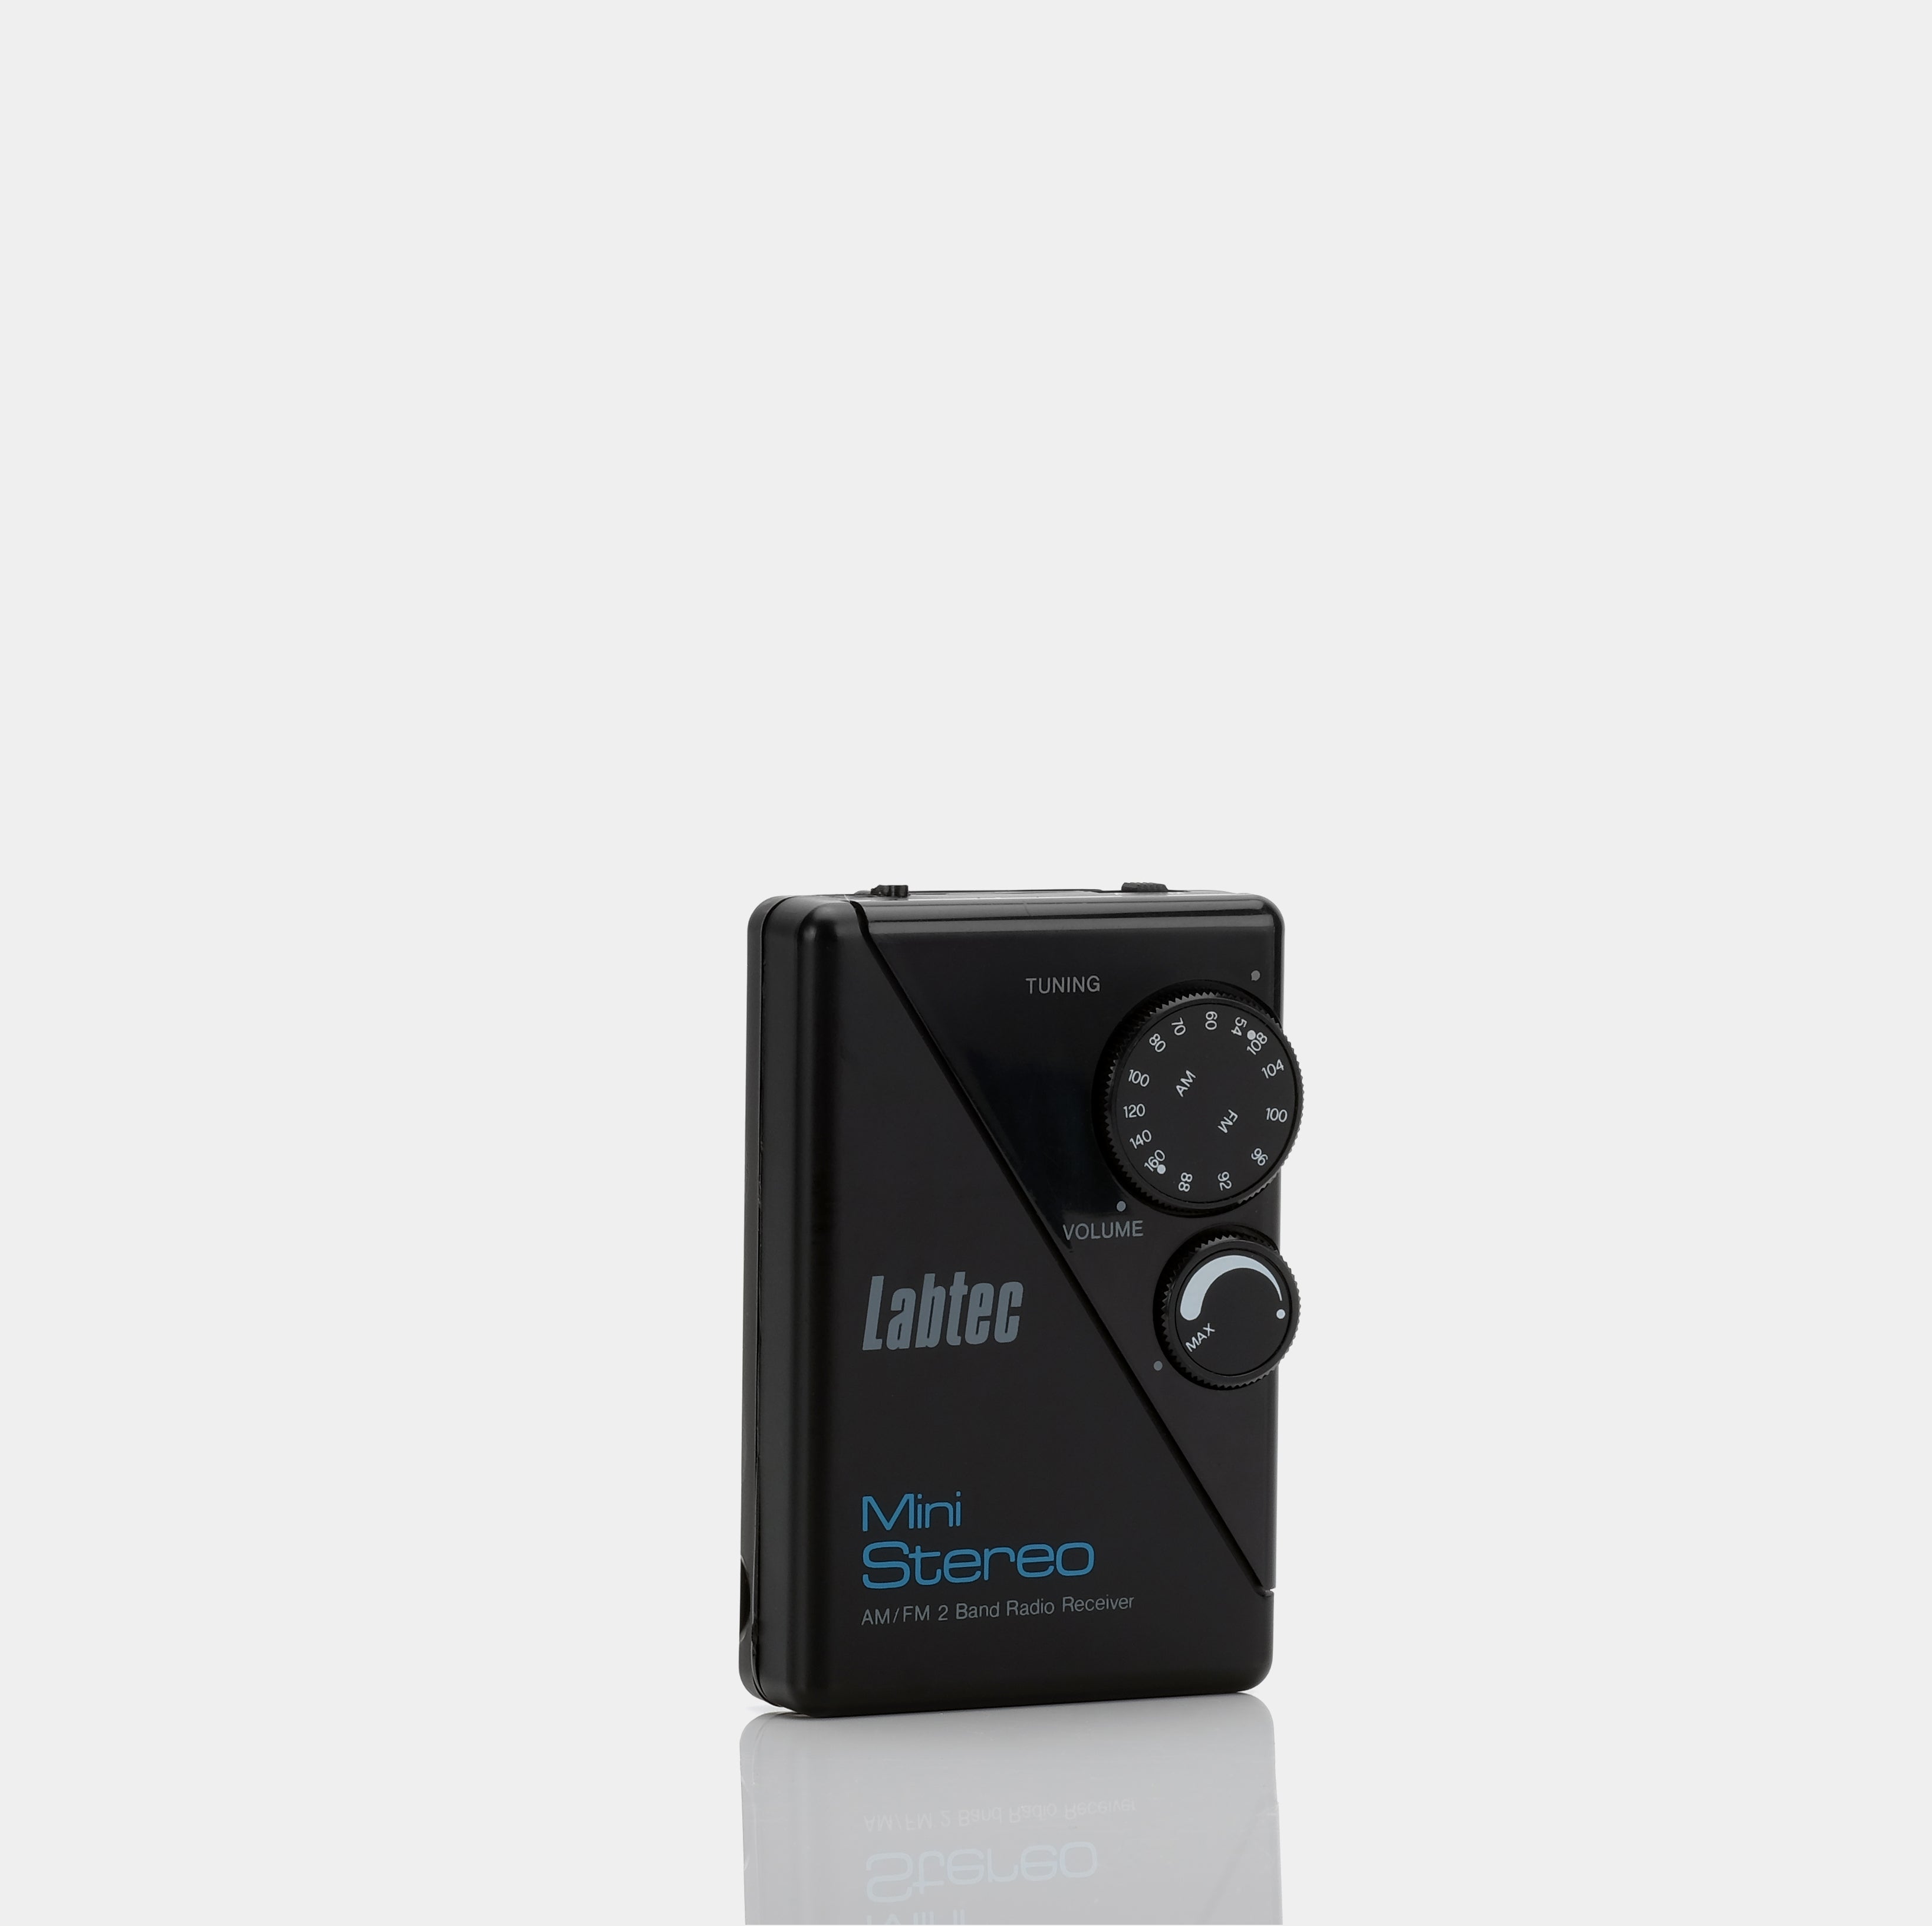 Labtec LR 5 Mini Stereo AM/FM Portable Radio